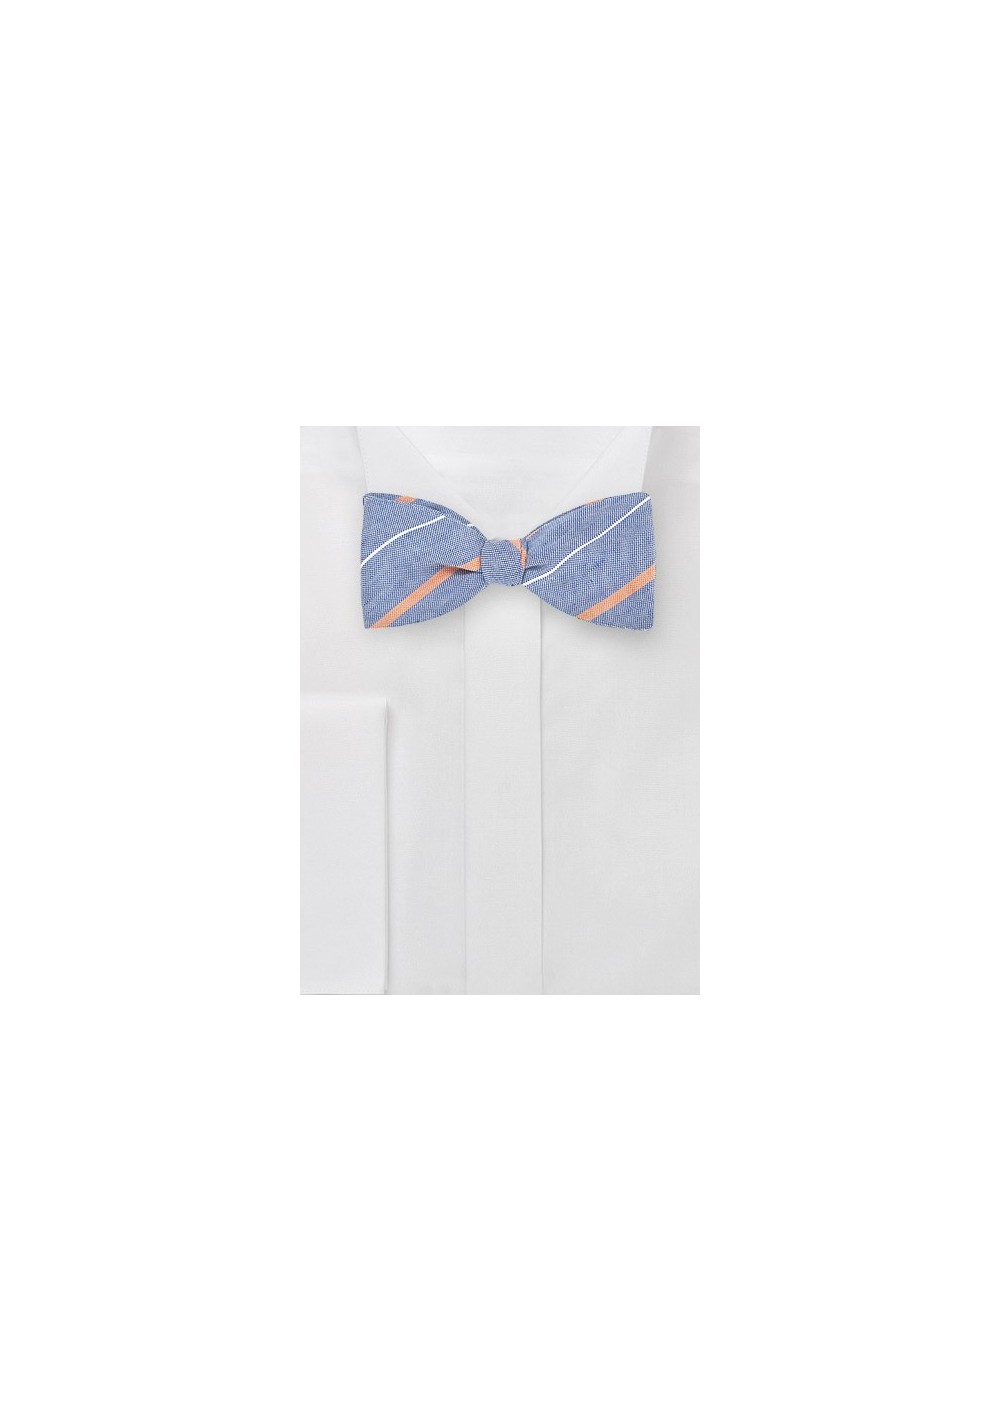 Vintage Blue Striped Bow Tie